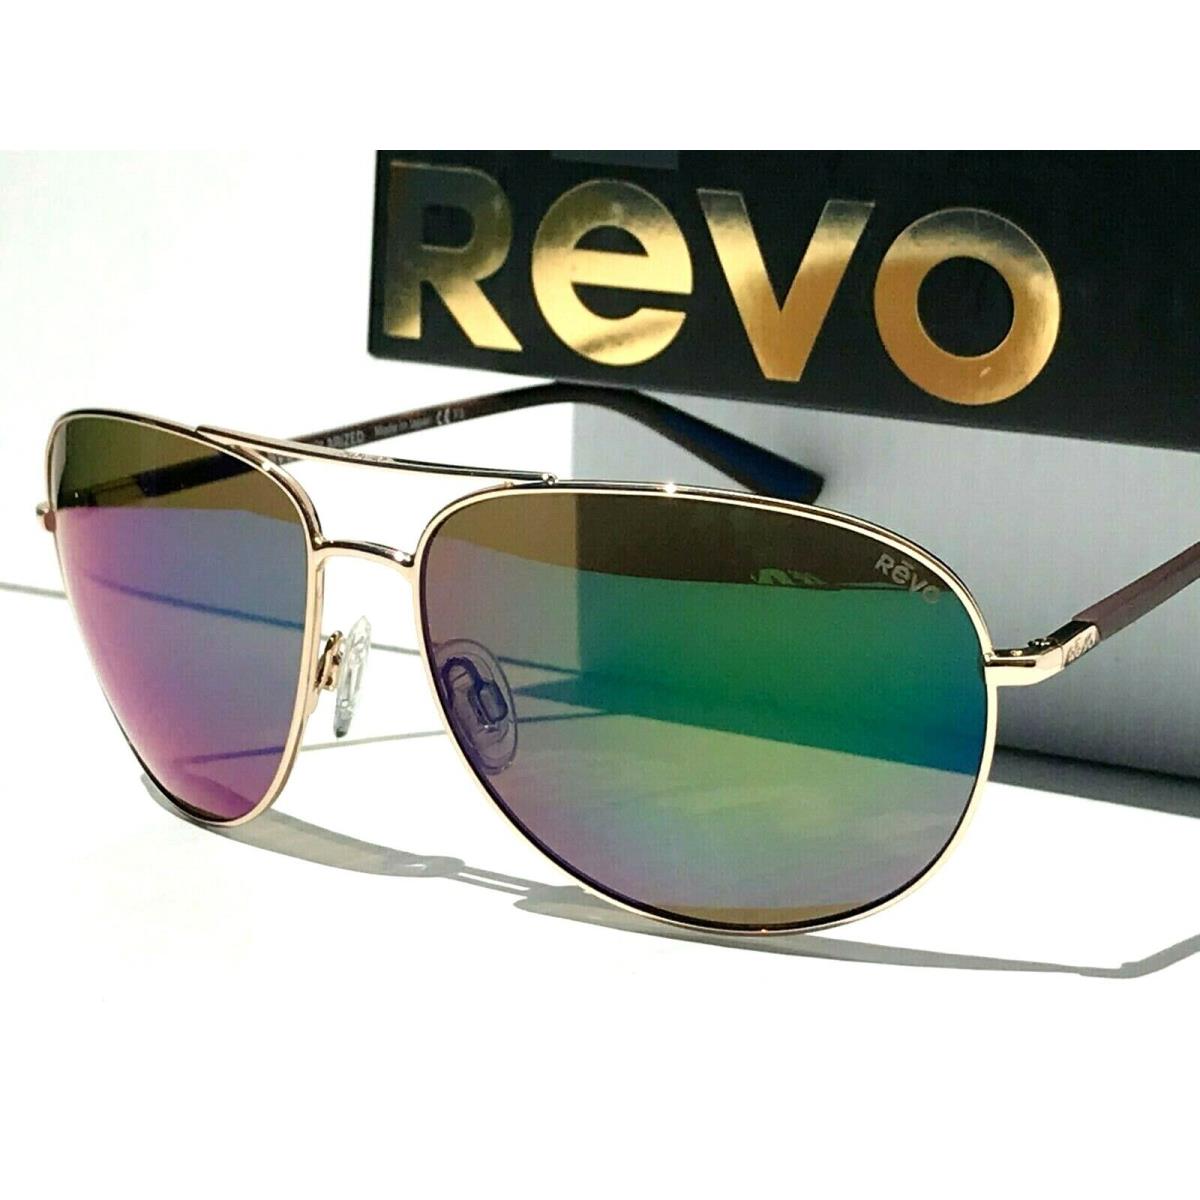 Revo Tarquin S Gold w Polarized Green Lens Sunglass 1083 04 GN